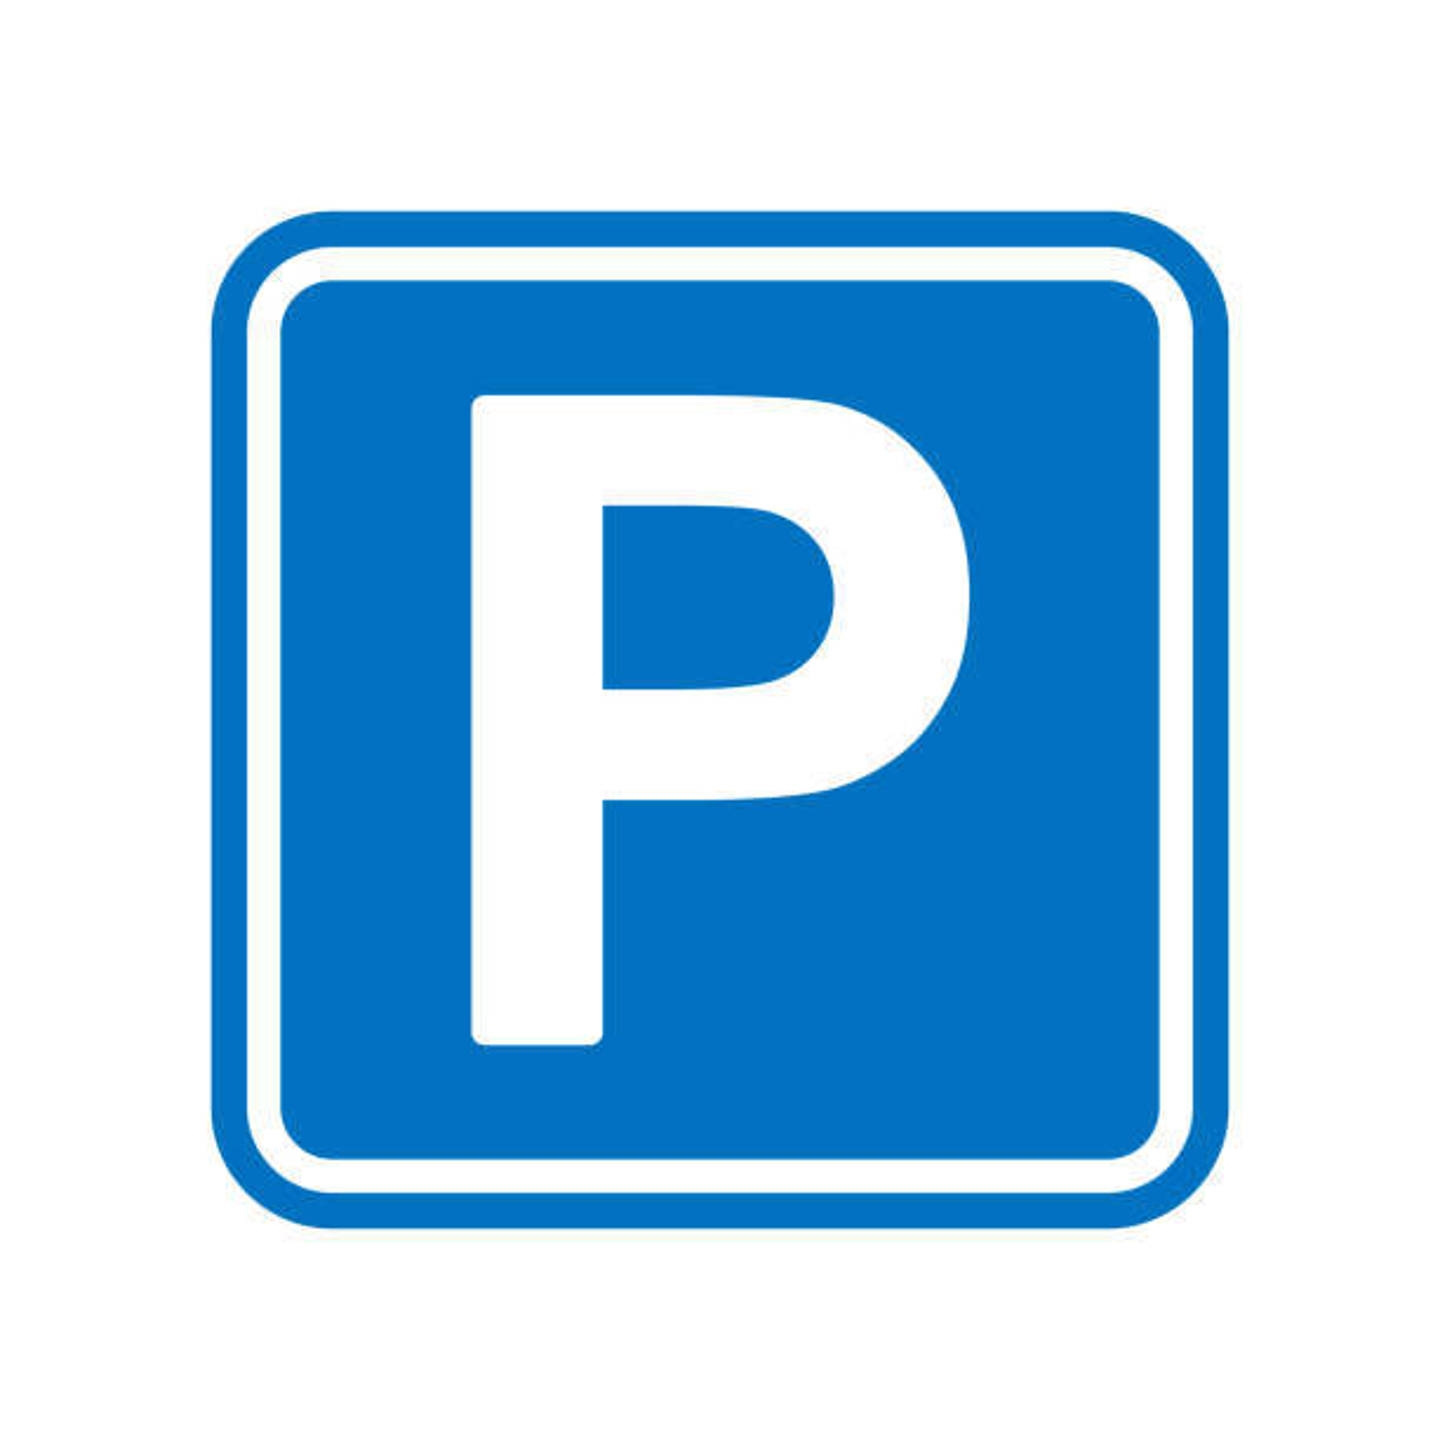 Parking à vendre à Neder-Over-Heembeek 1120 82400.00€  chambres 12.50m² - annonce 1324759